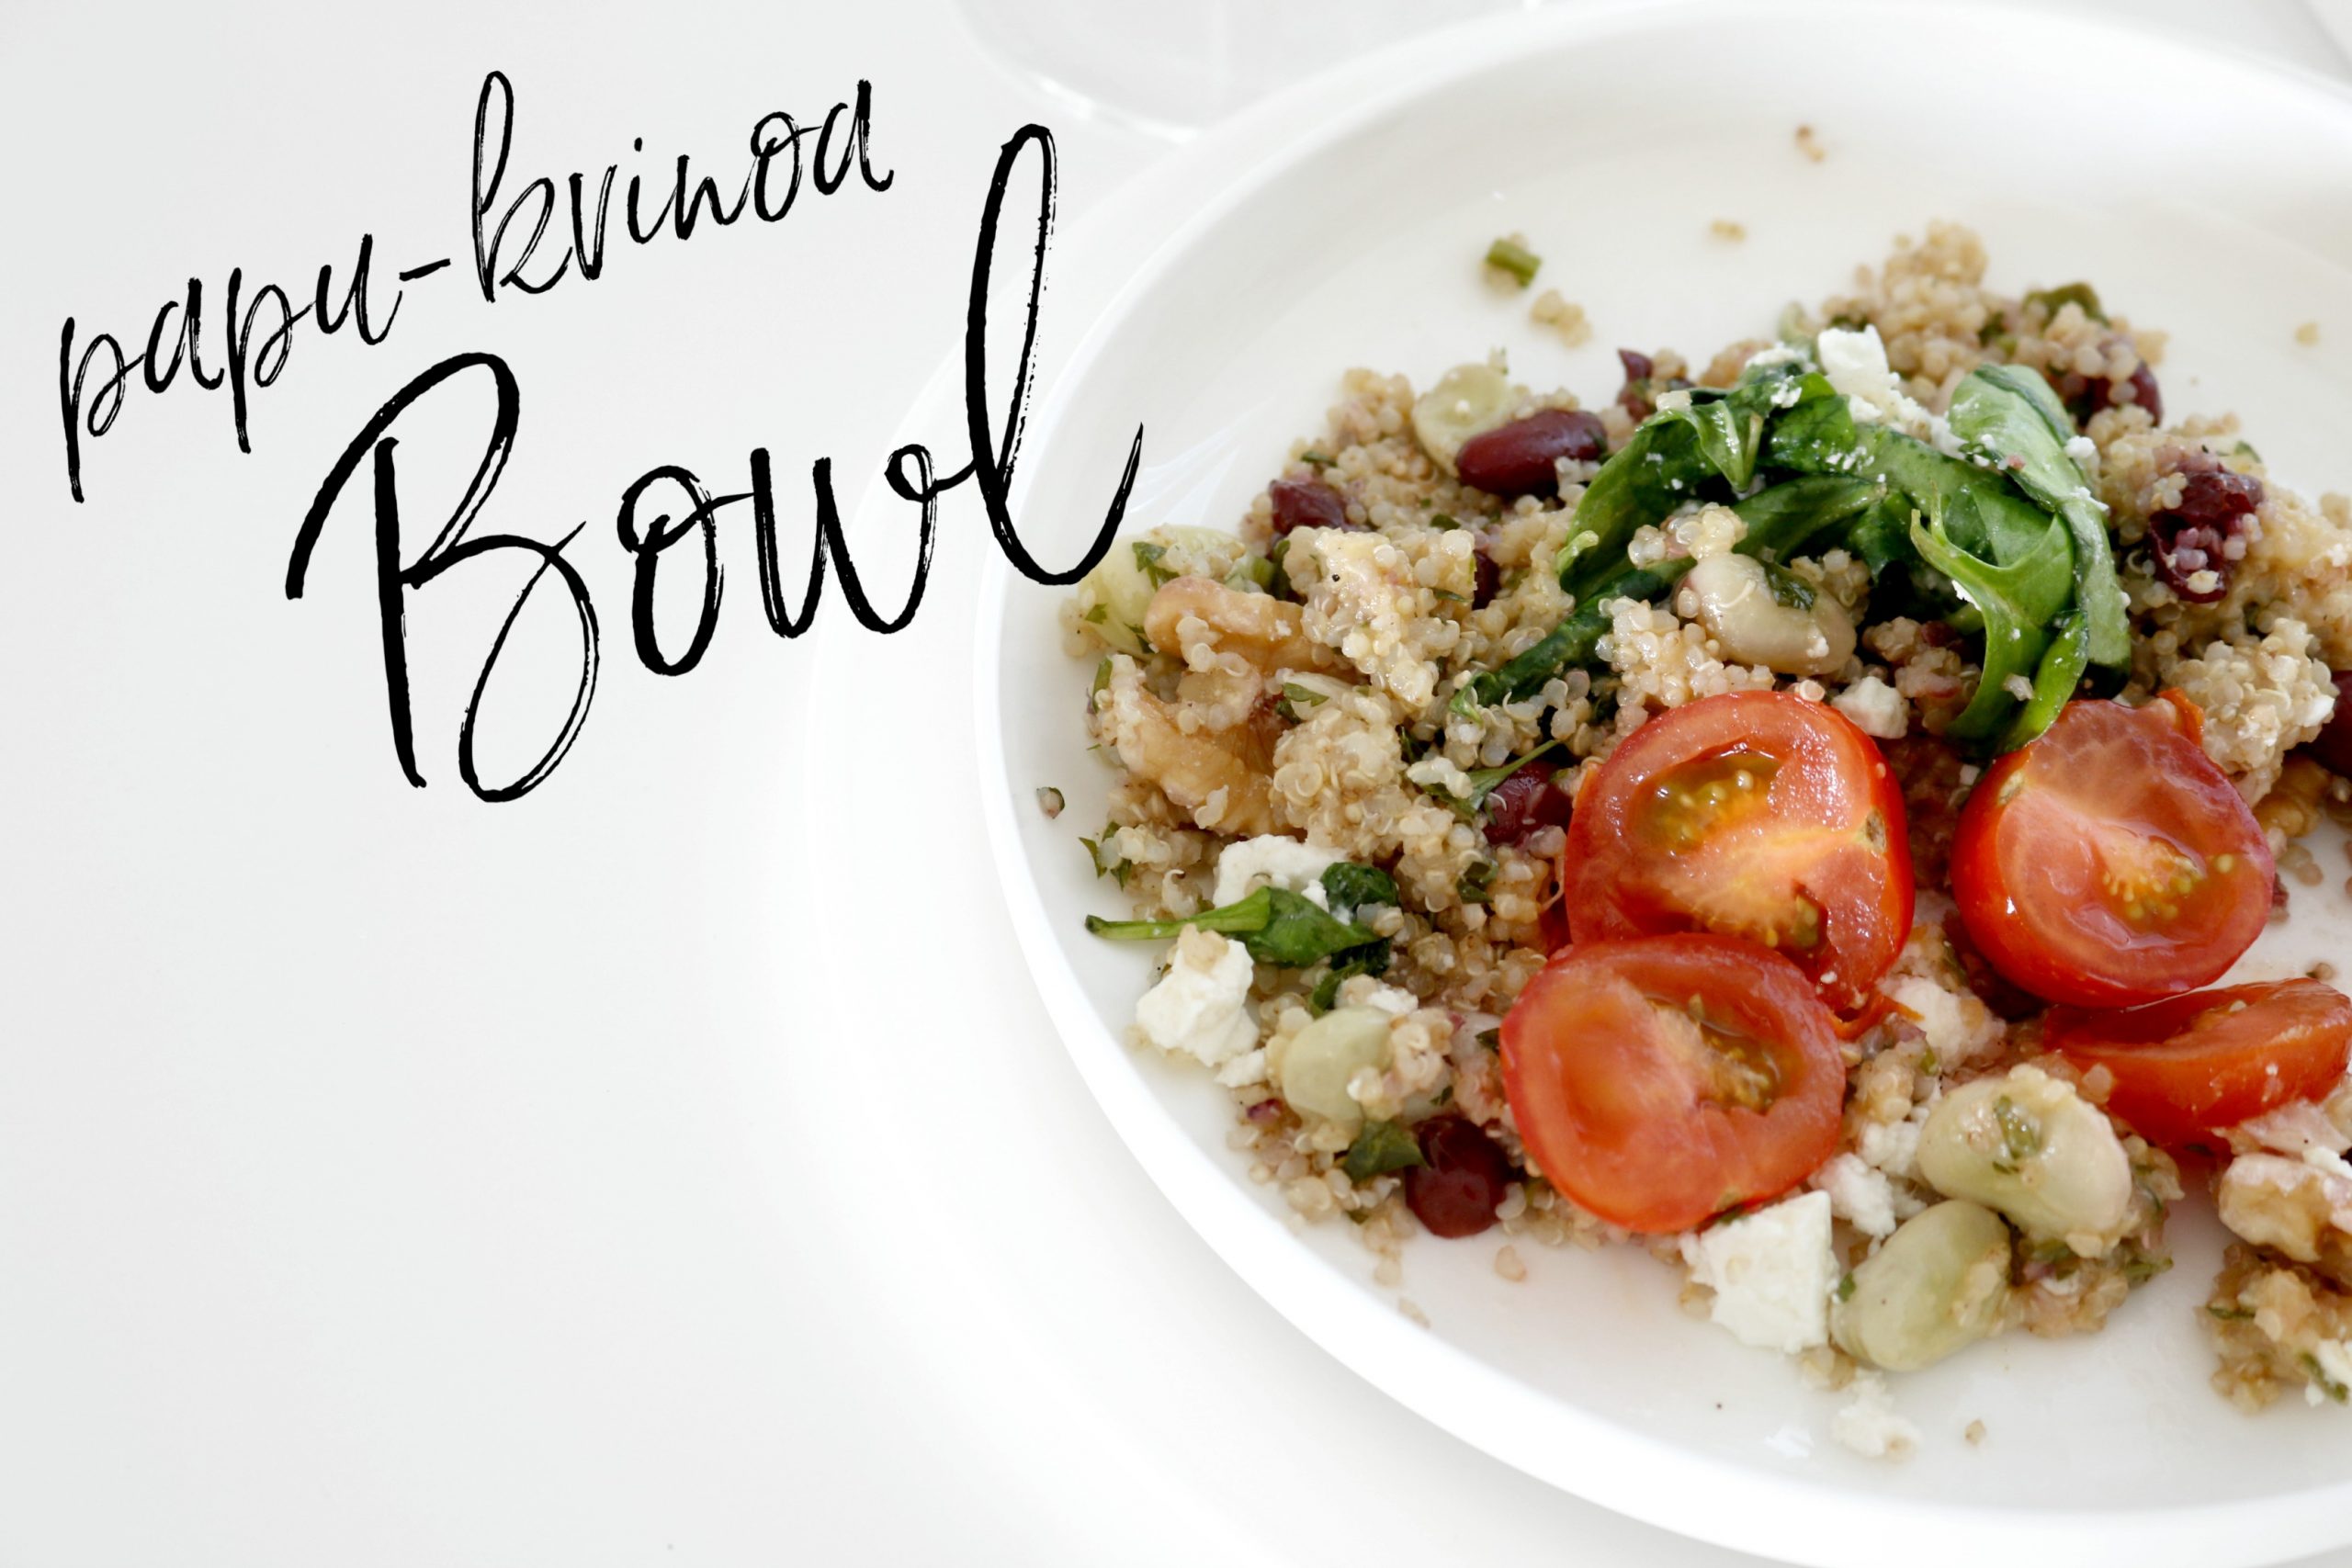 Papu-Kvinoa bowl resepti